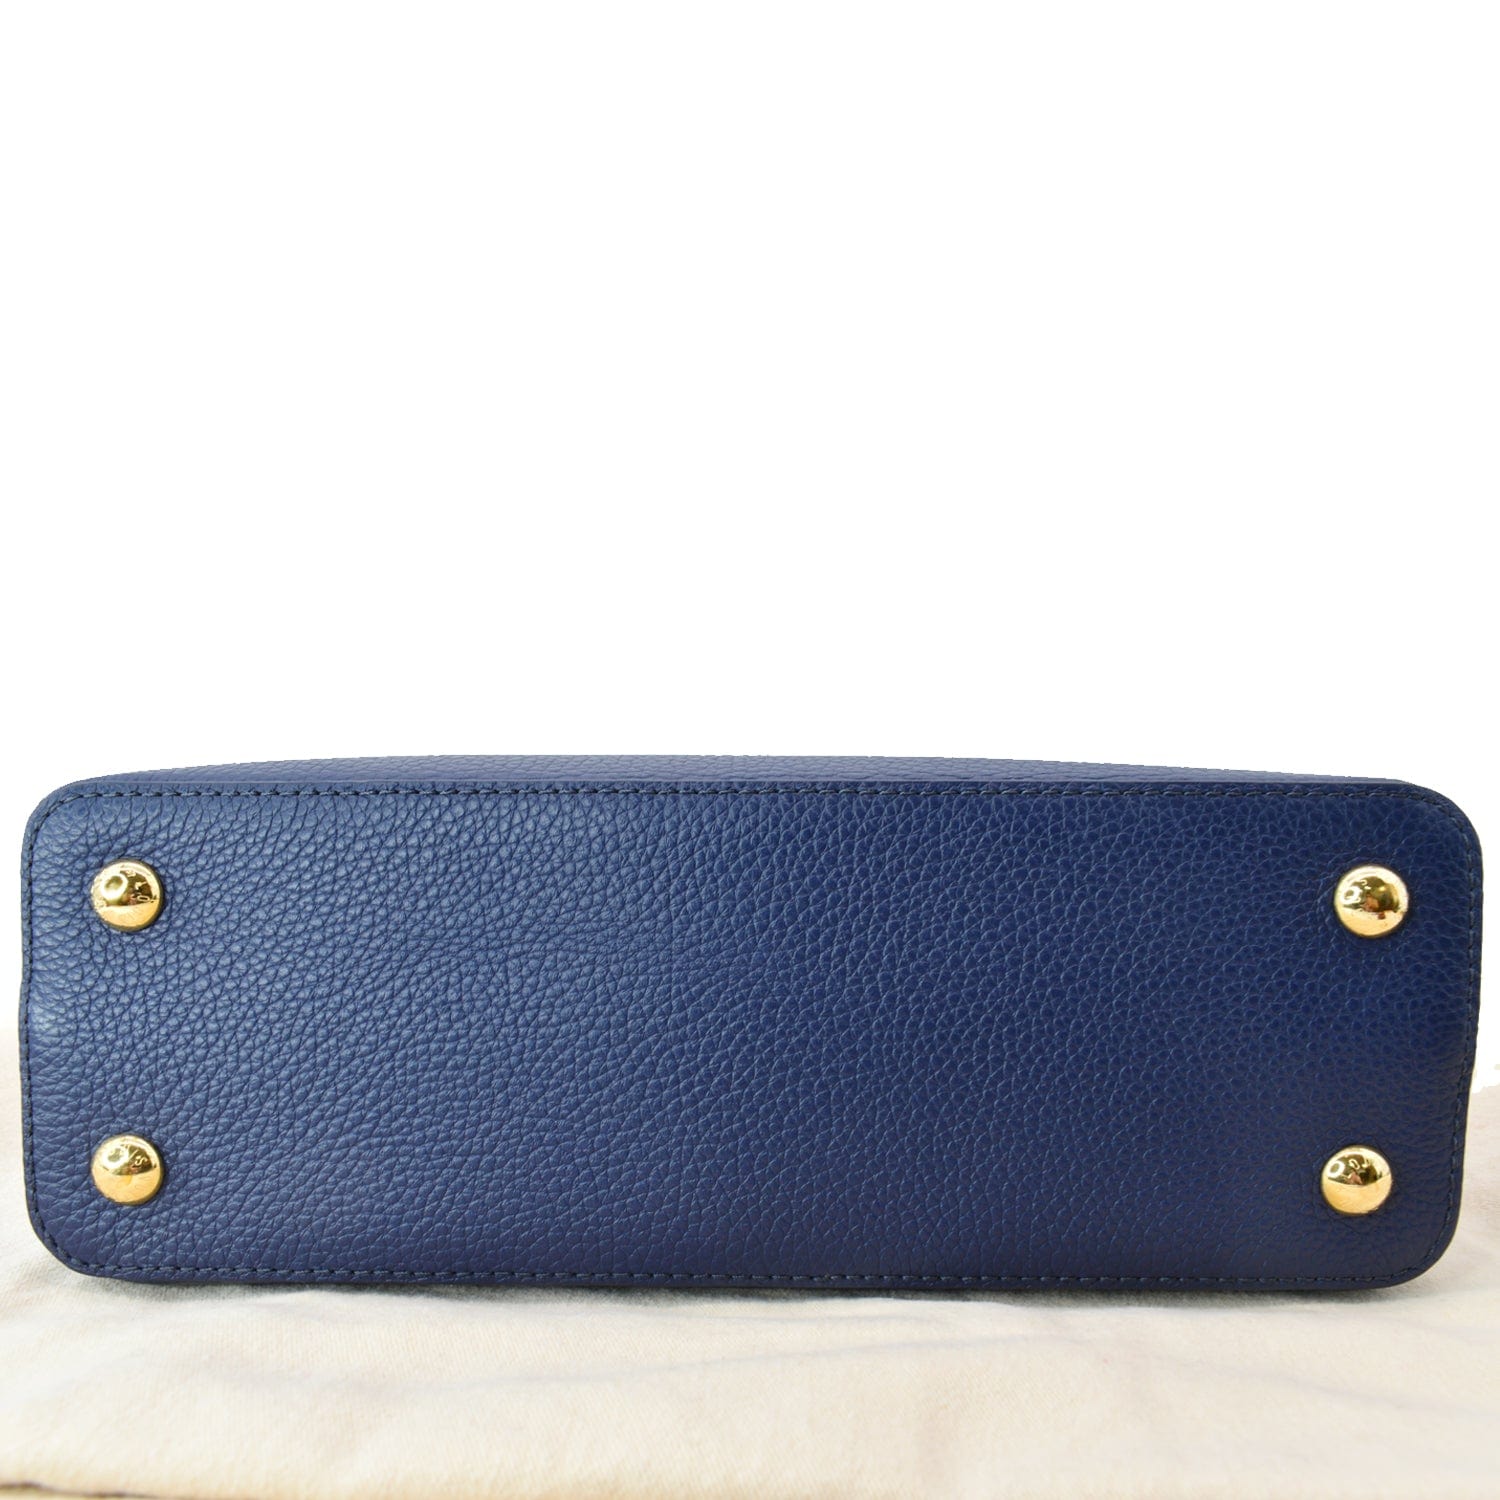 Python handbag Louis Vuitton Blue in Python - 20371699